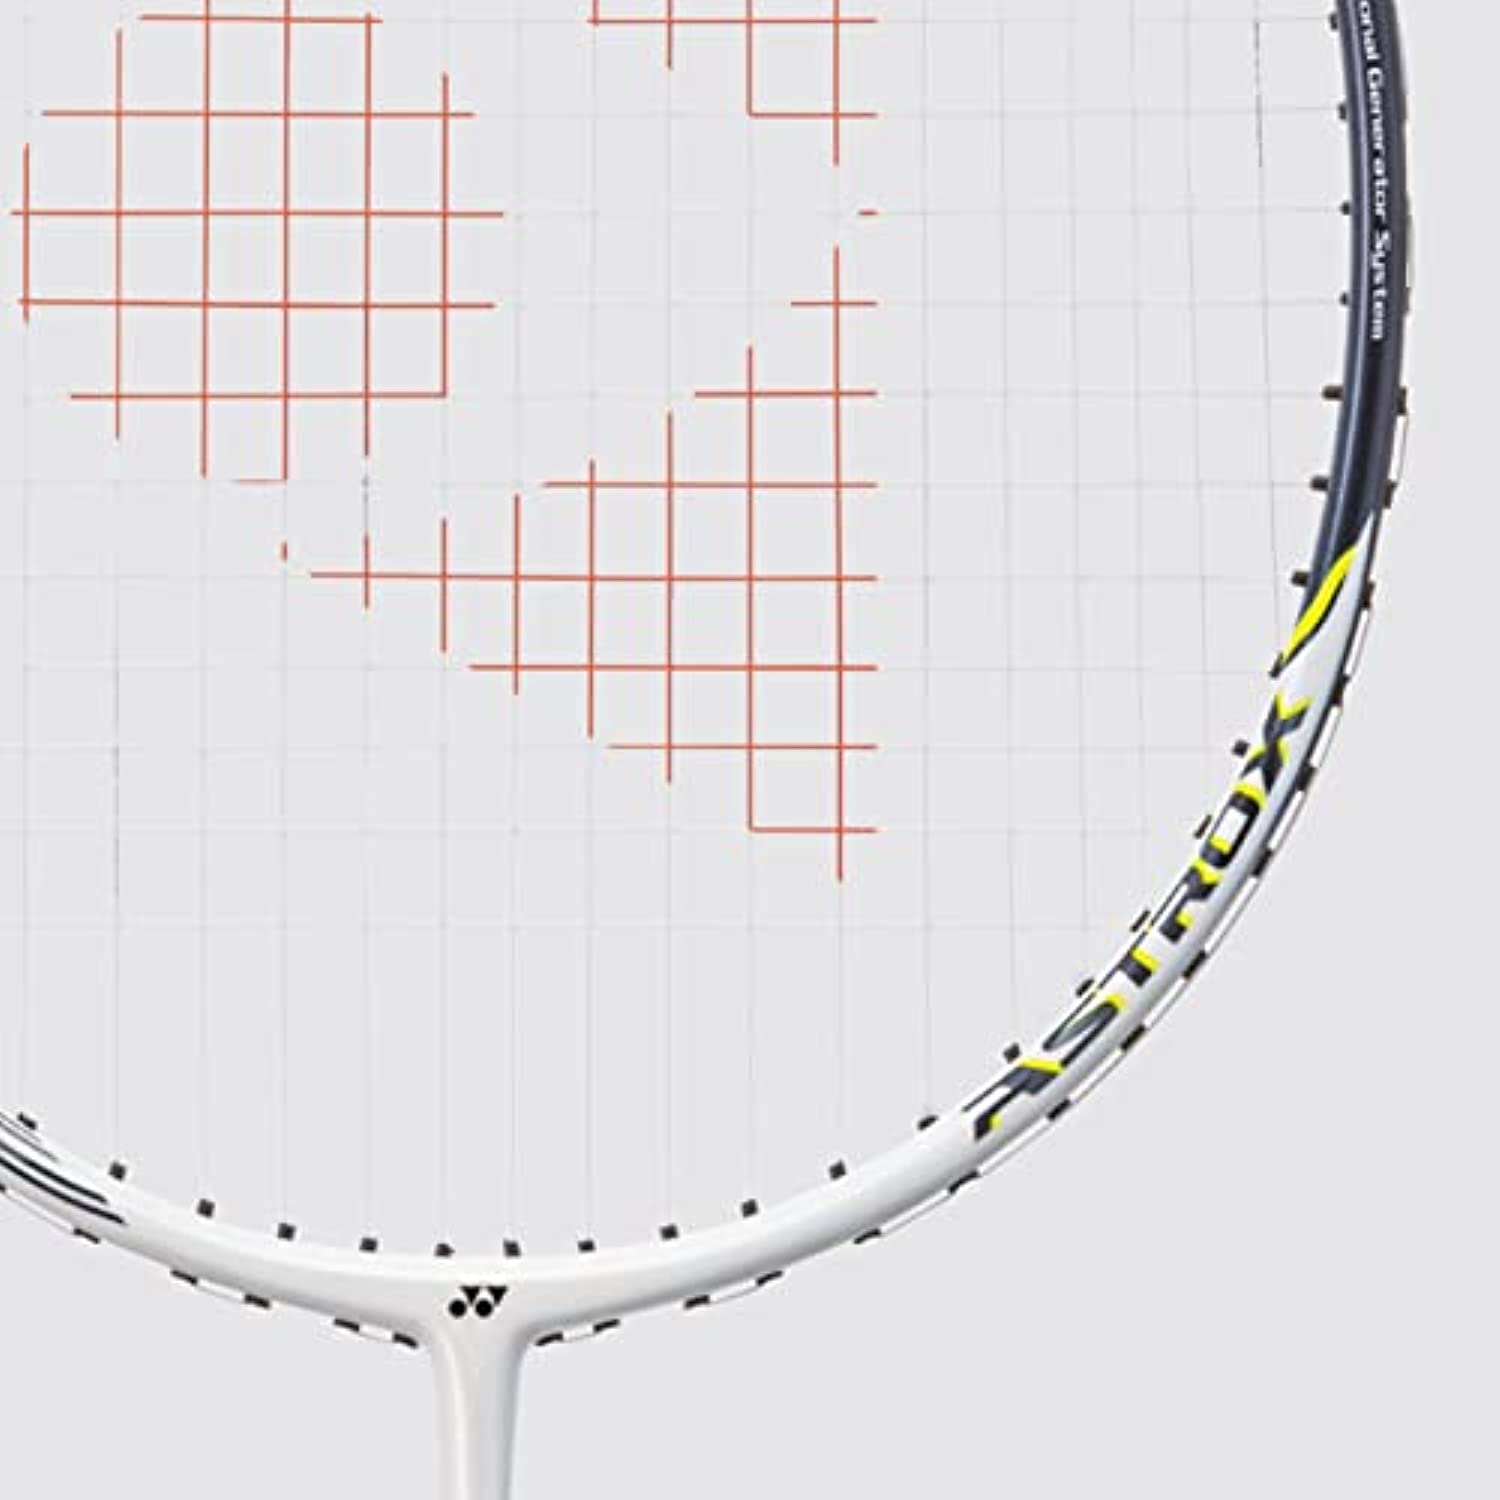 Yonex Astrox 99 Play Badminton Racket (White Tiger) (4UG5) (Pre-Strung)